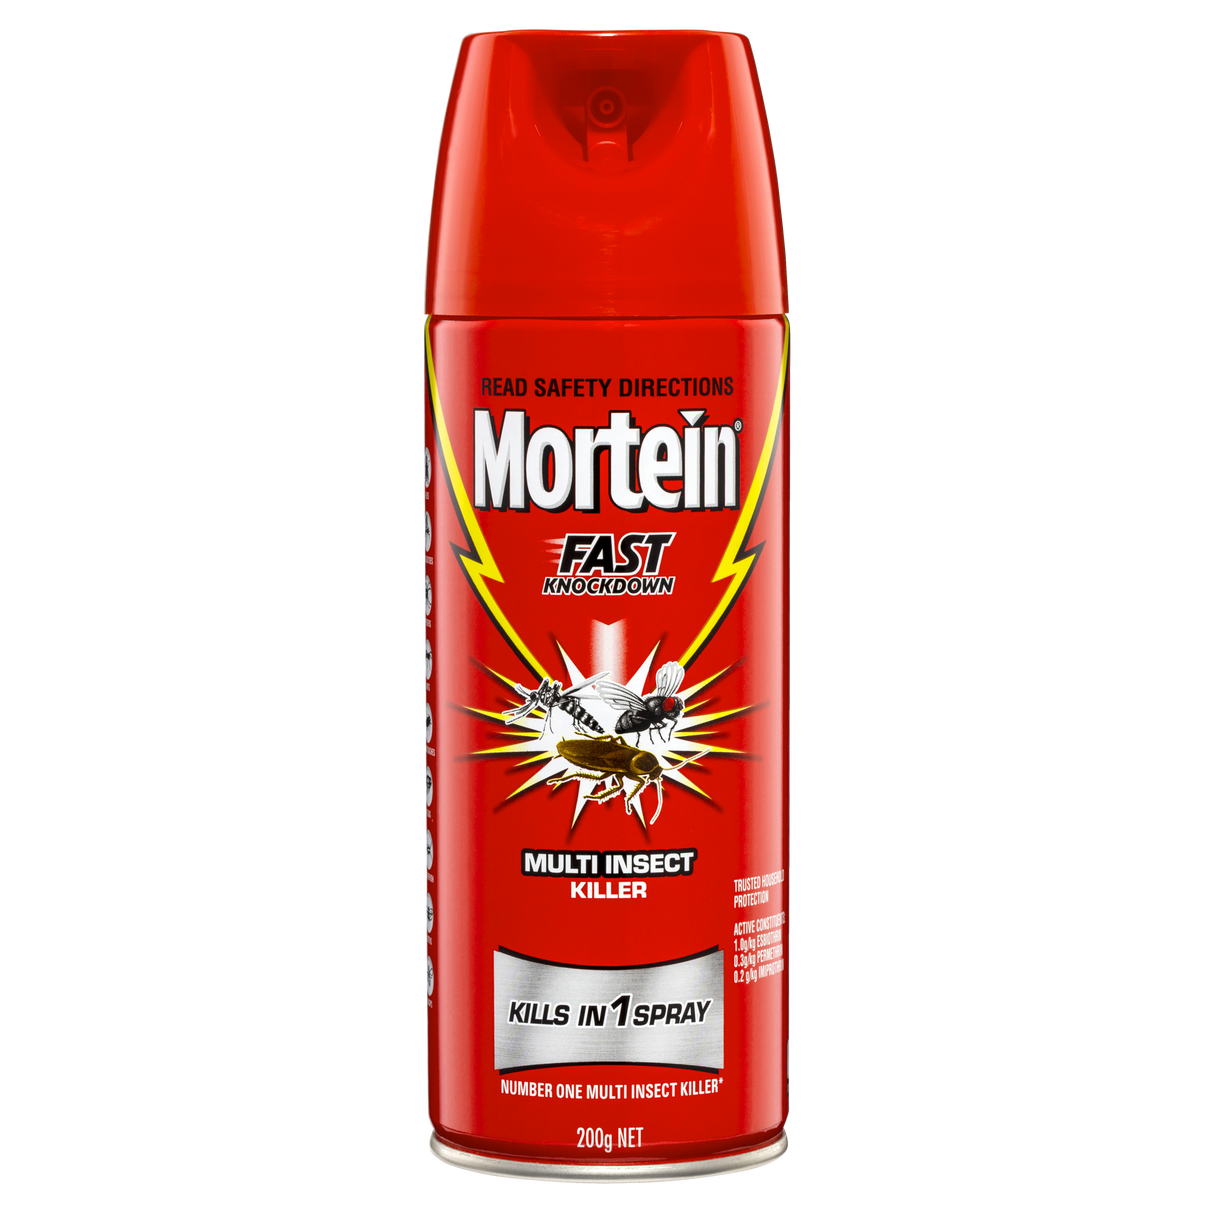 Mortein Fast Knockdown Multi Insect Killer Spray 200g